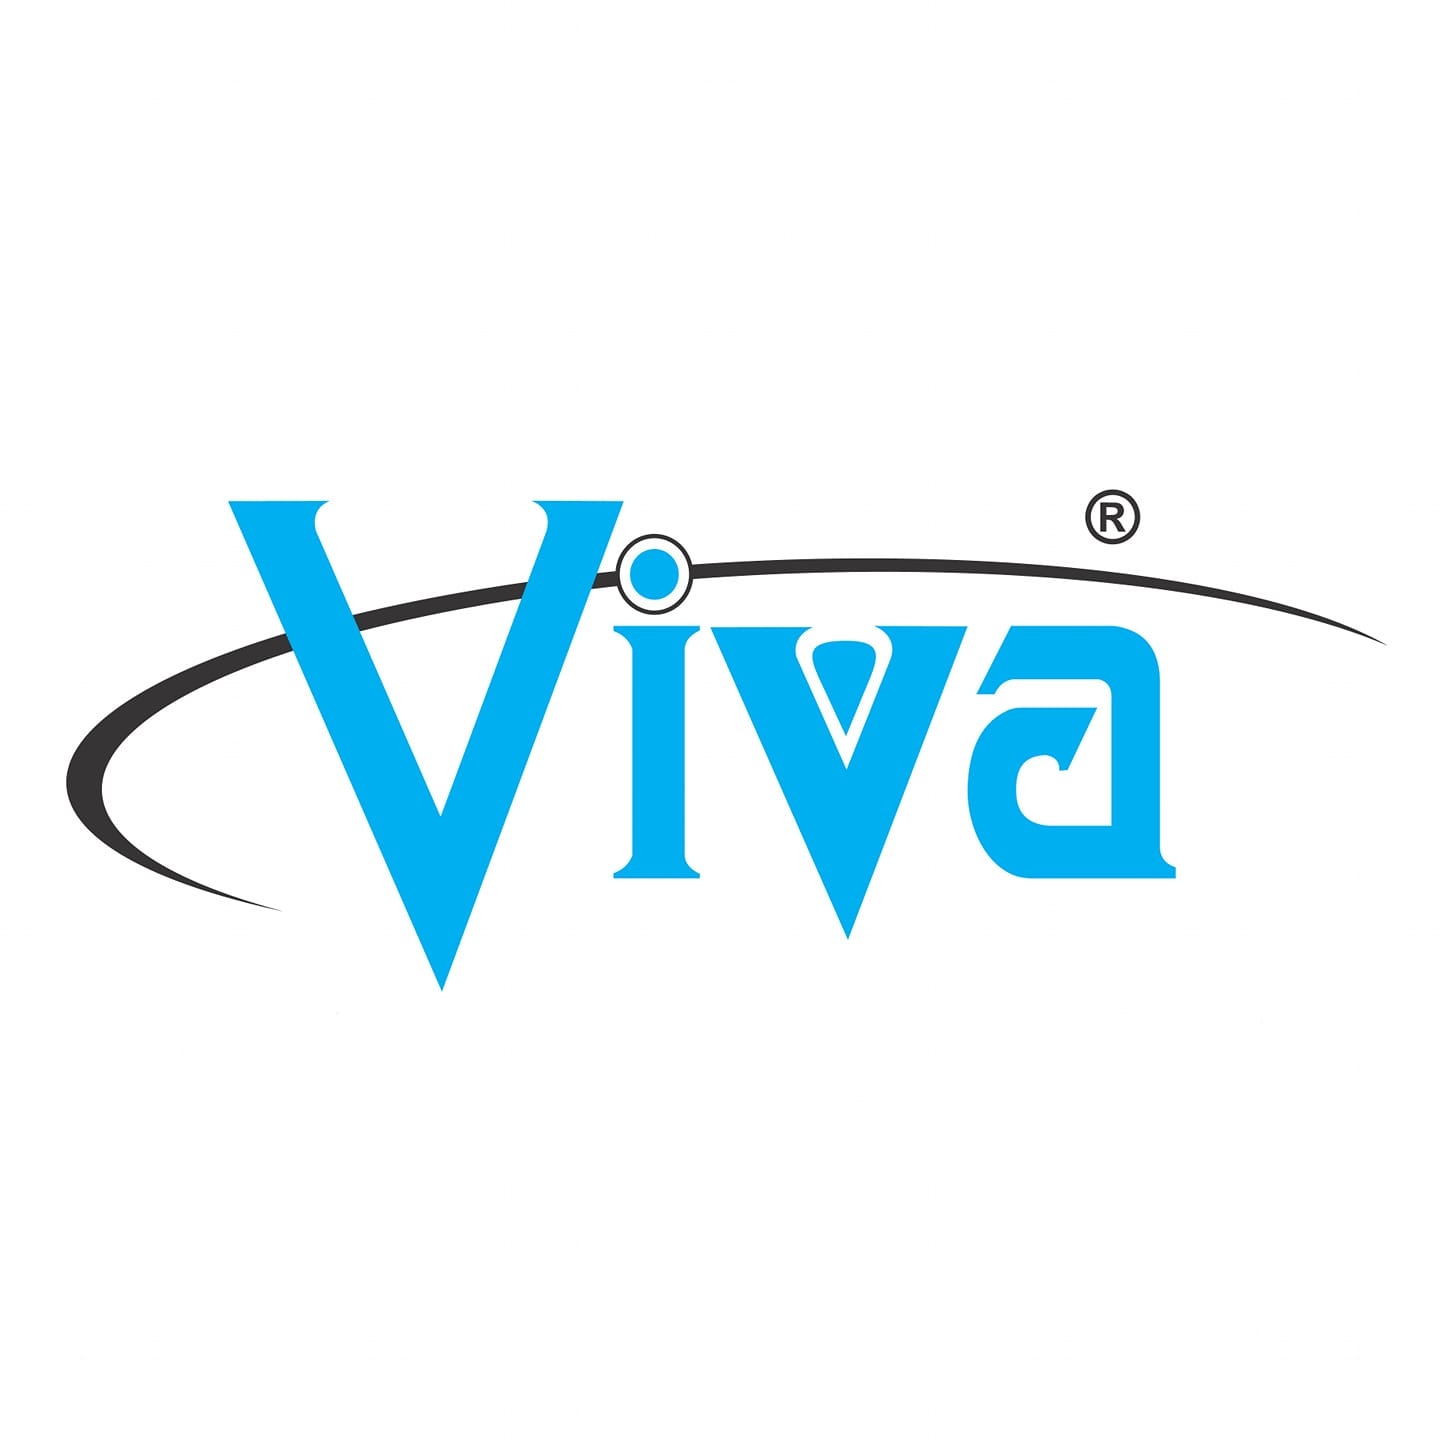 Viva Composite Panel Pvt Ltd